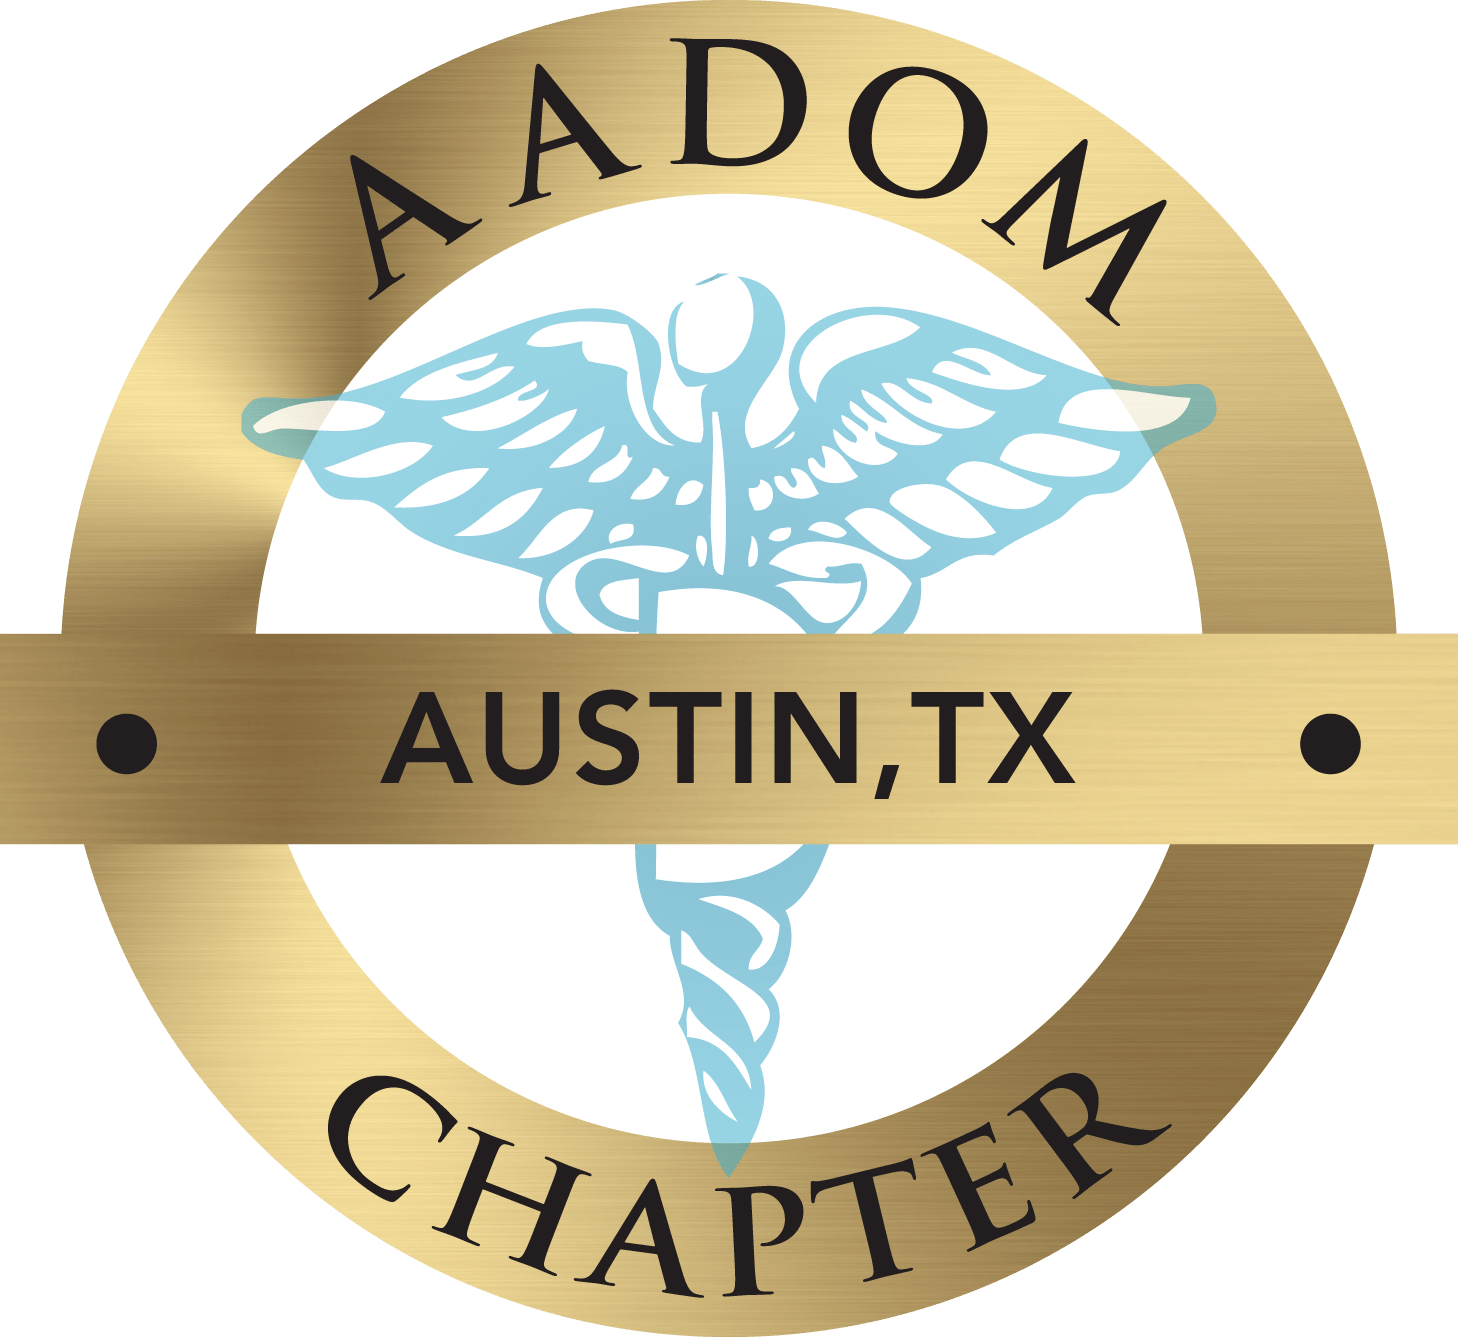 Austin TX AADOM Chapter logo